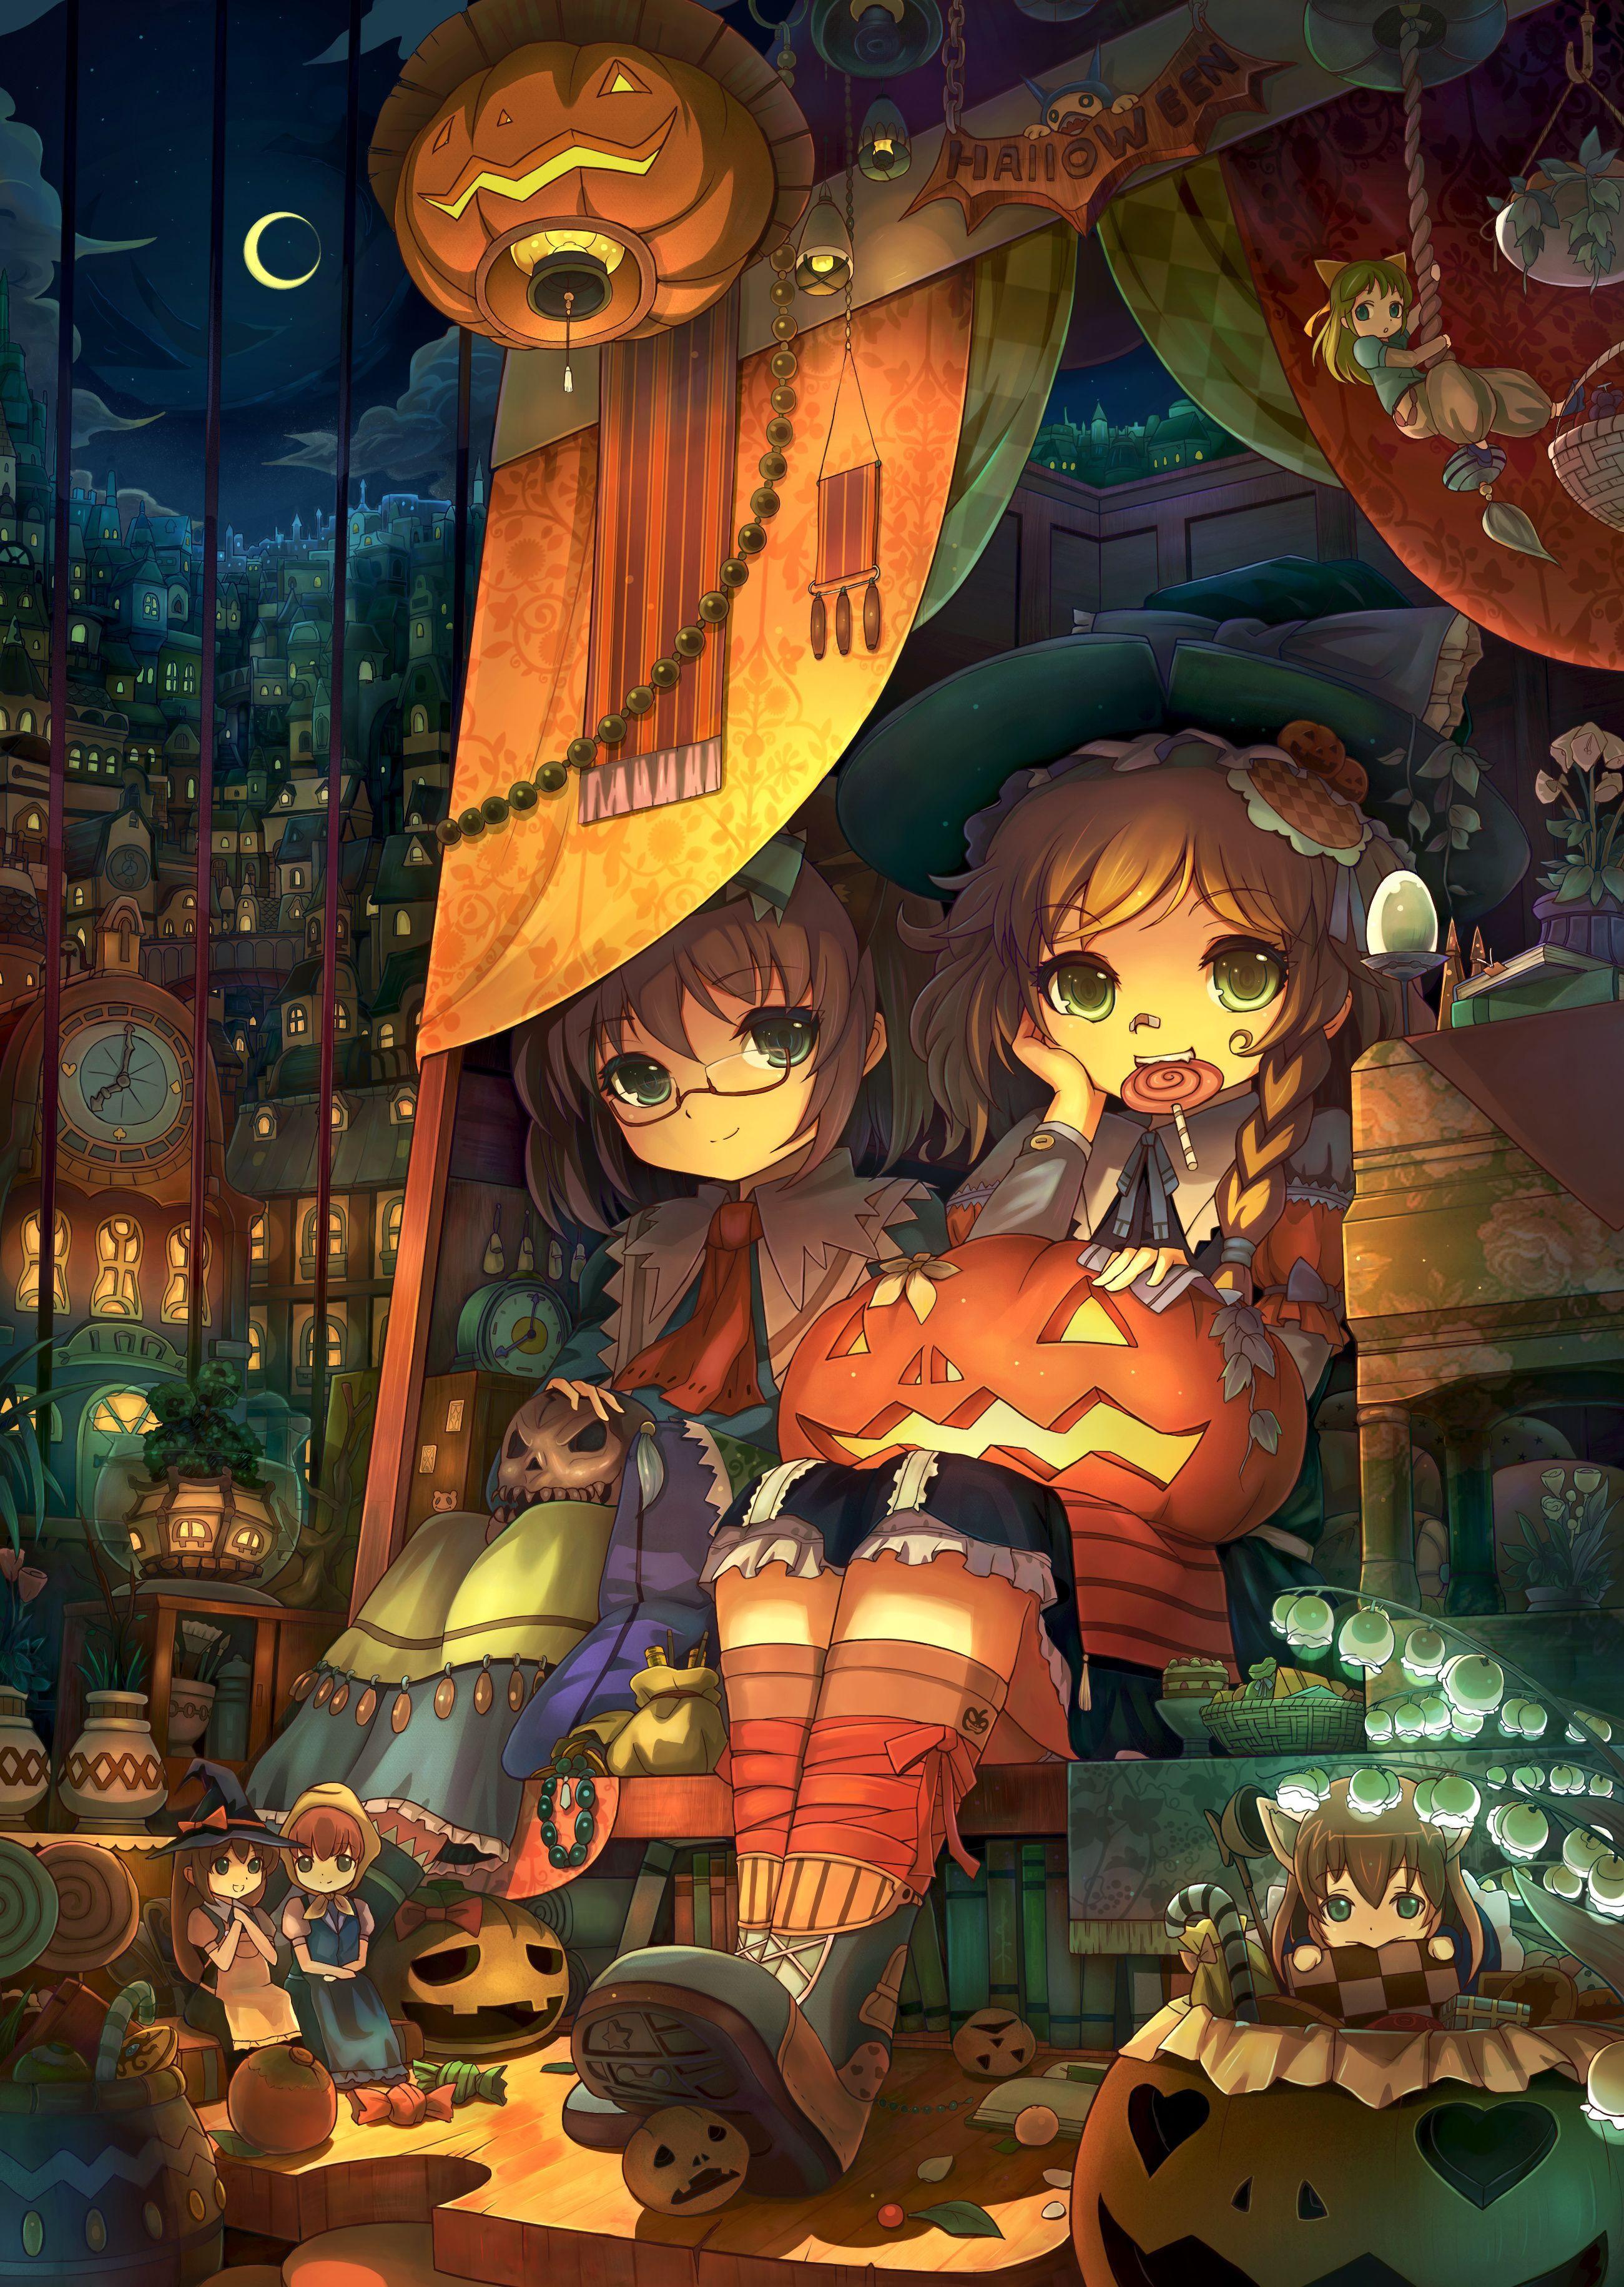 Premium Vector | Halloween characters. cute bat halloween anime. halloween  bat illustration